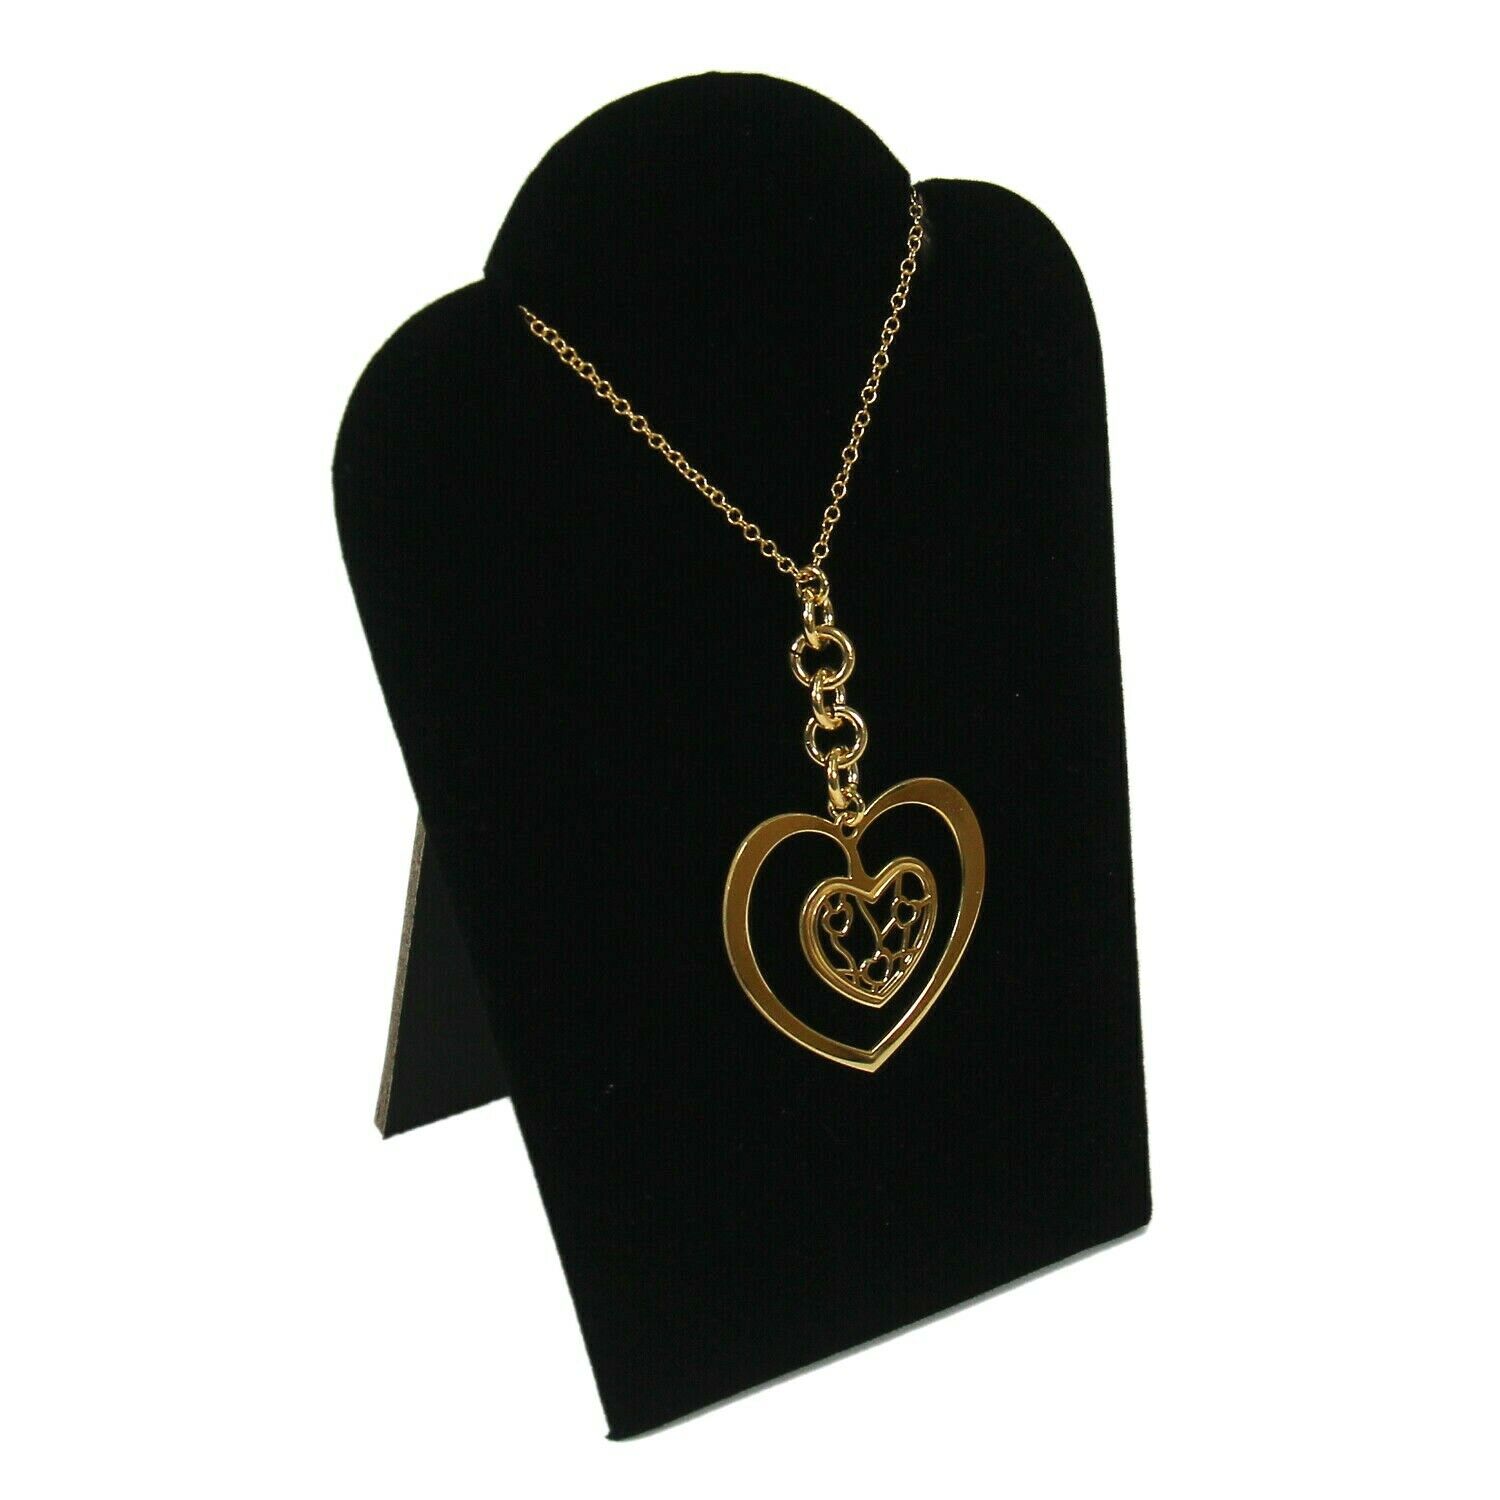 Black Velvet Necklace Chain Jewelry Display Holder Padded Neckform Easel Stand